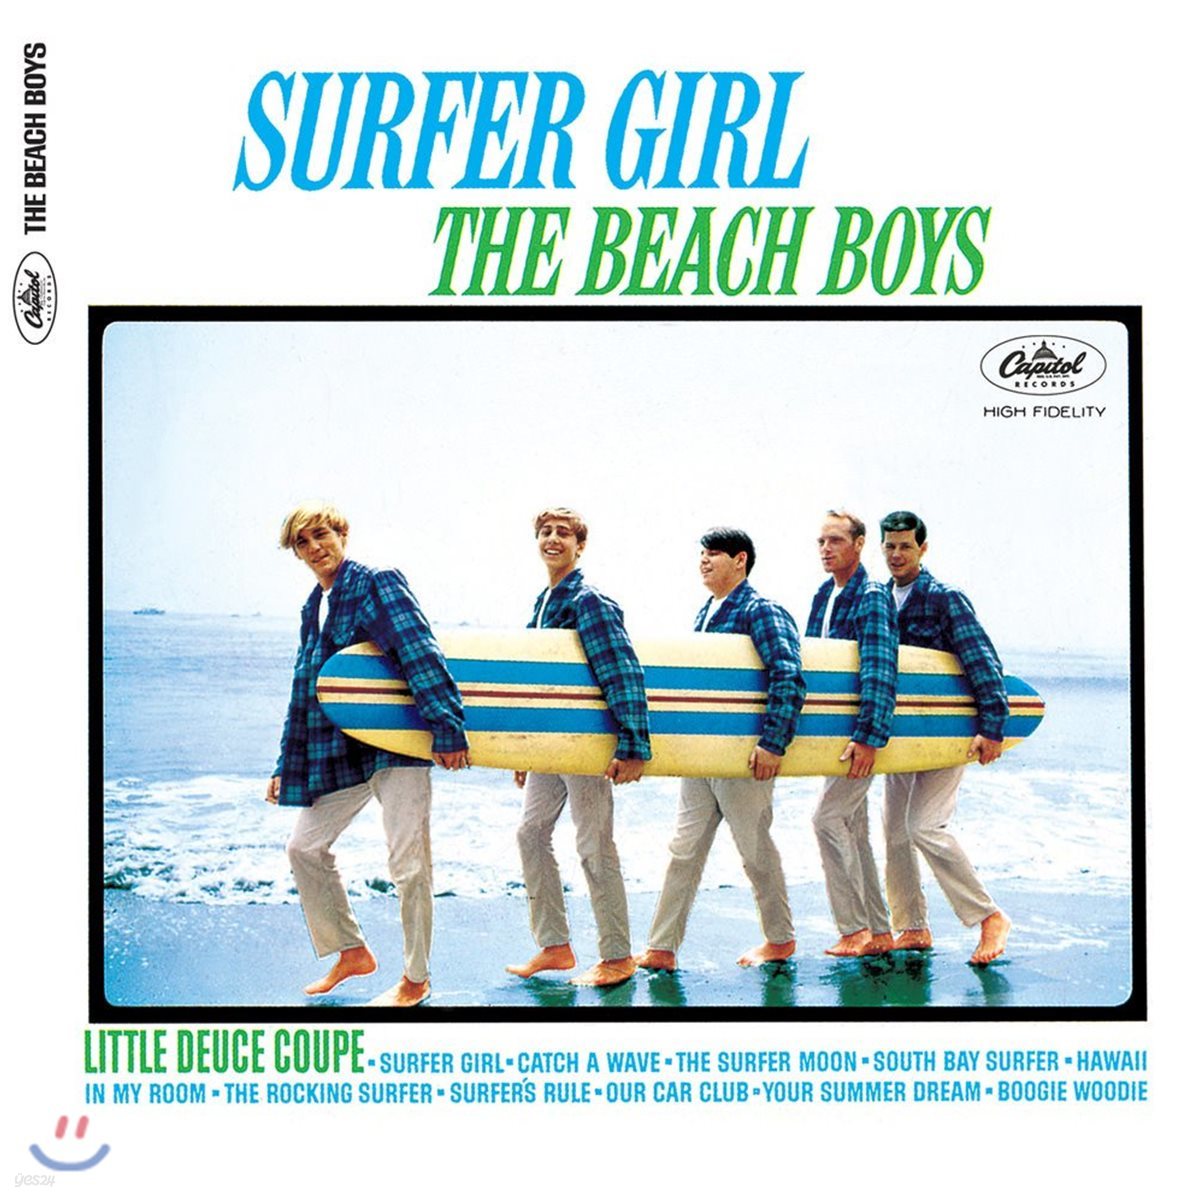 The Beach Boys (비치 보이스) - Surfer Girl (Mono) [LP]